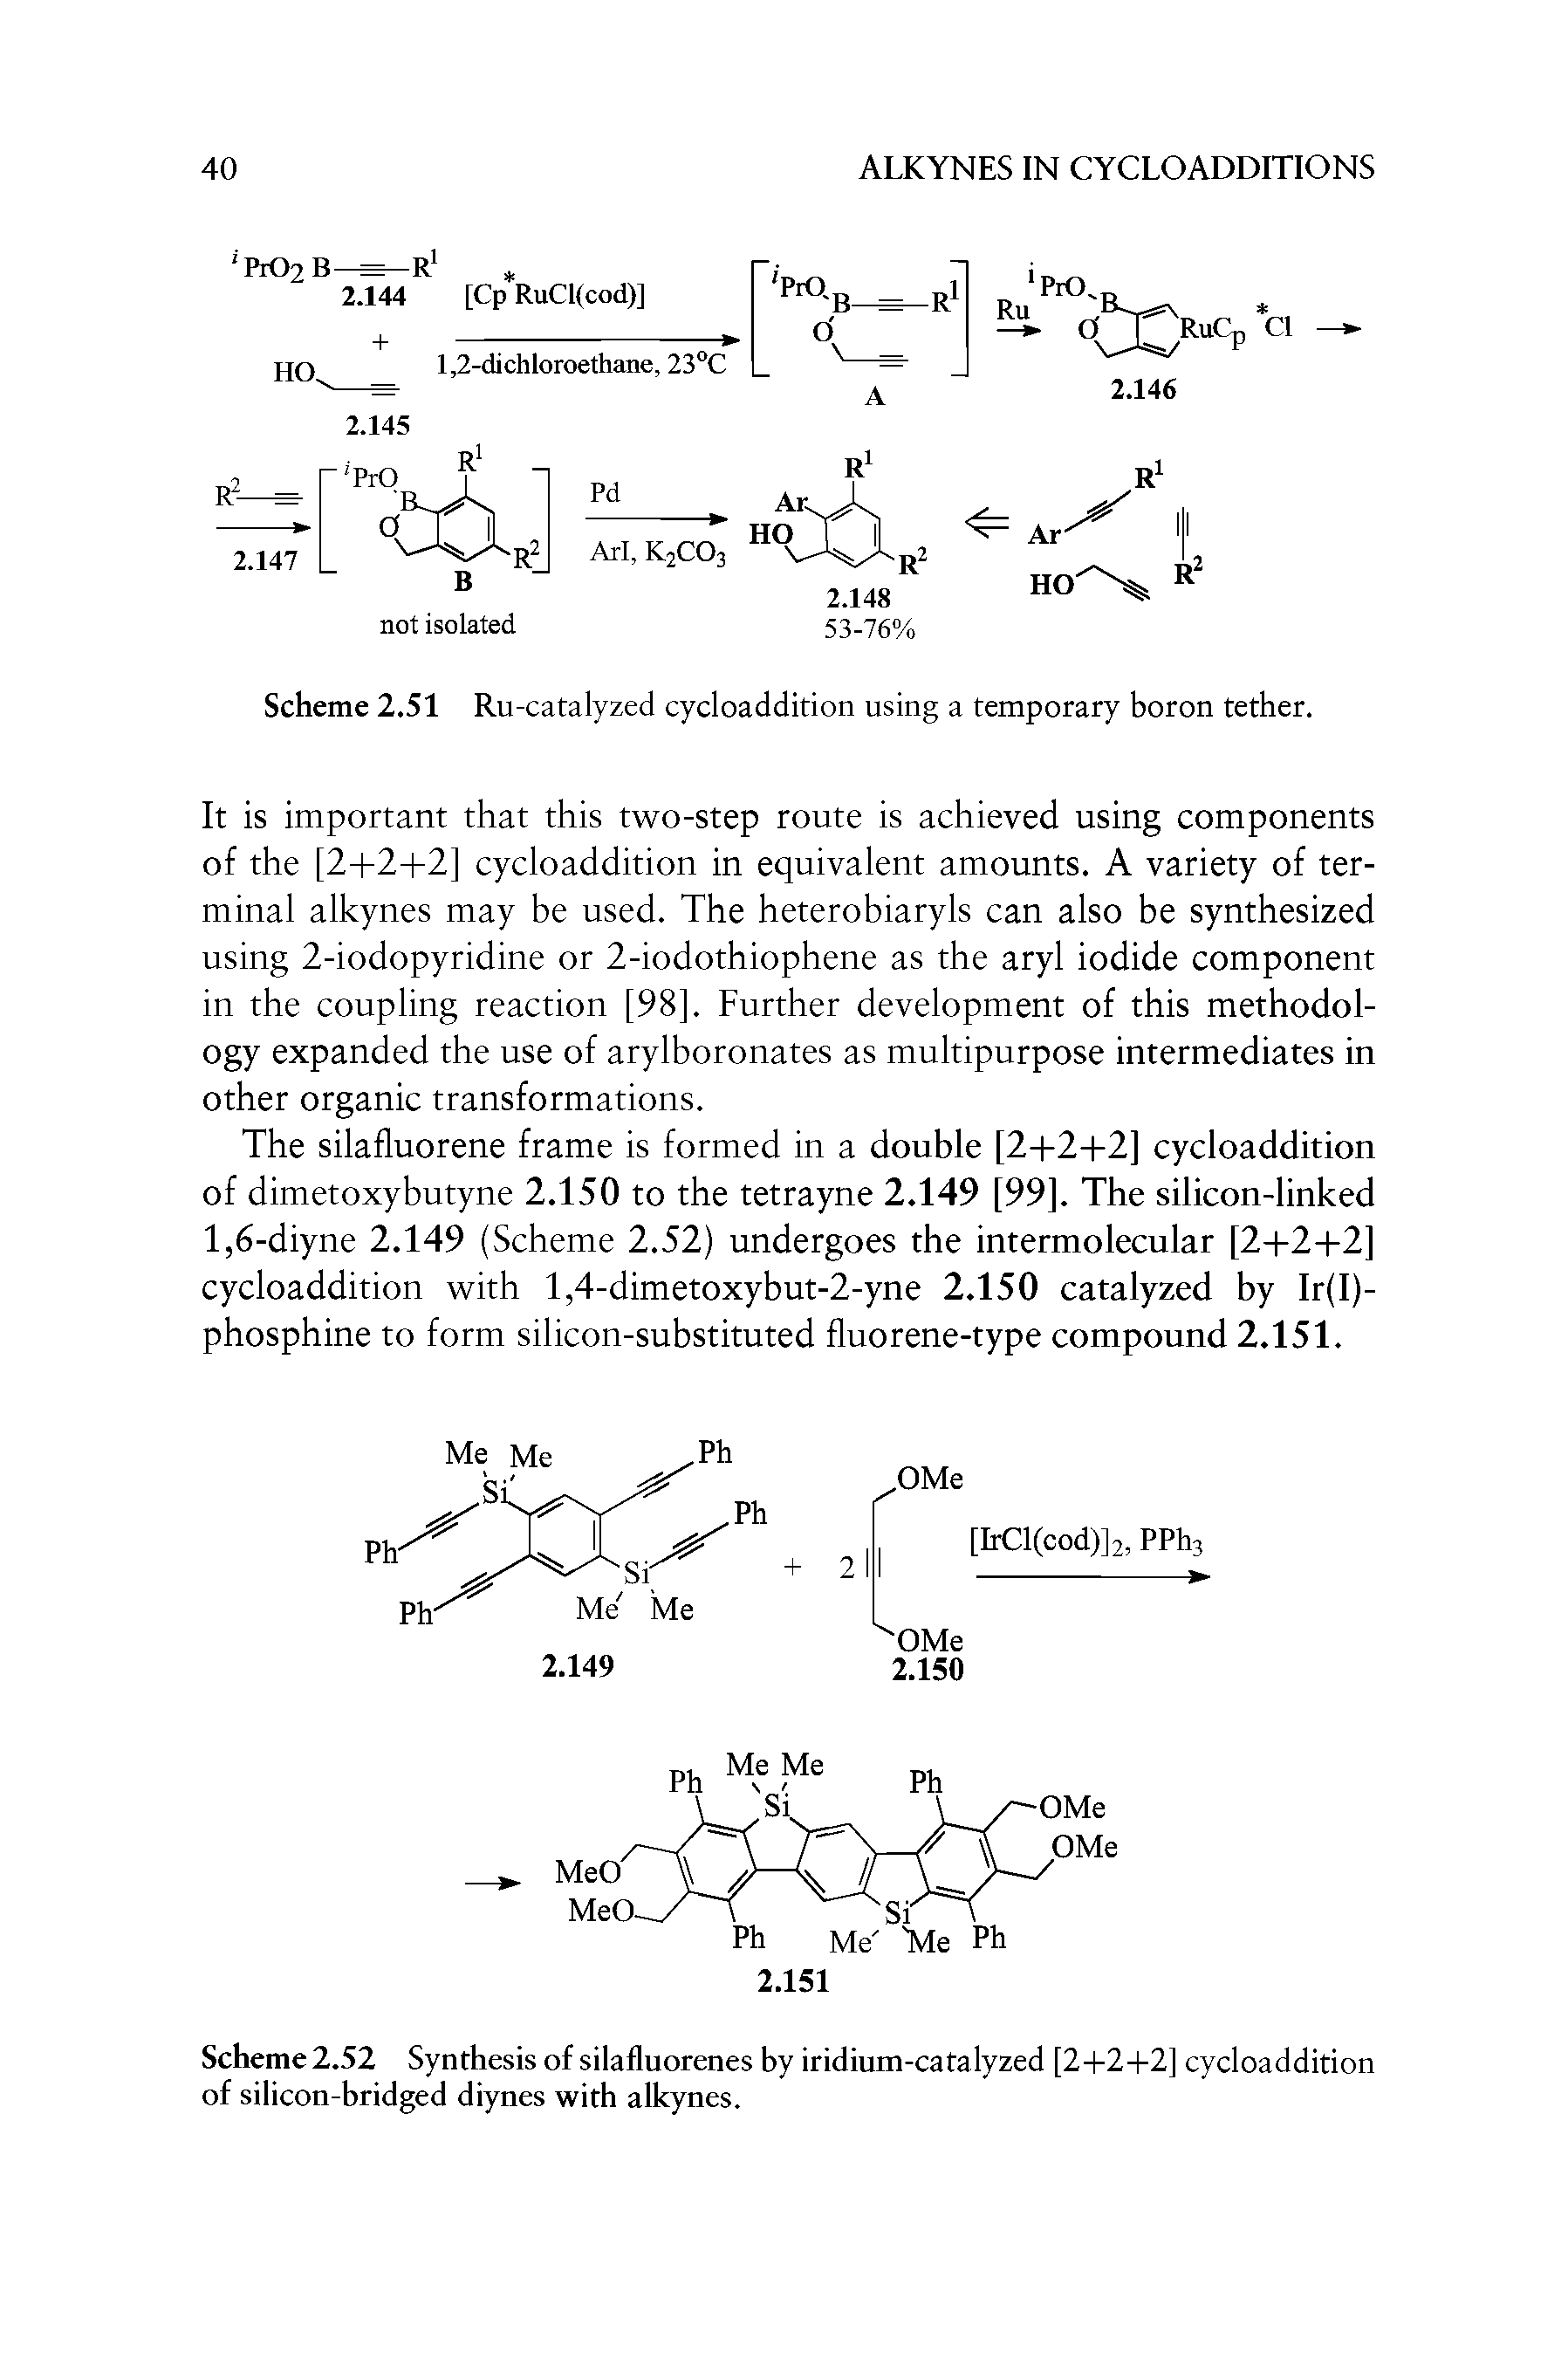 Scheme 2.51 Ru-catalyzed cycloaddition using a temporary boron tether.